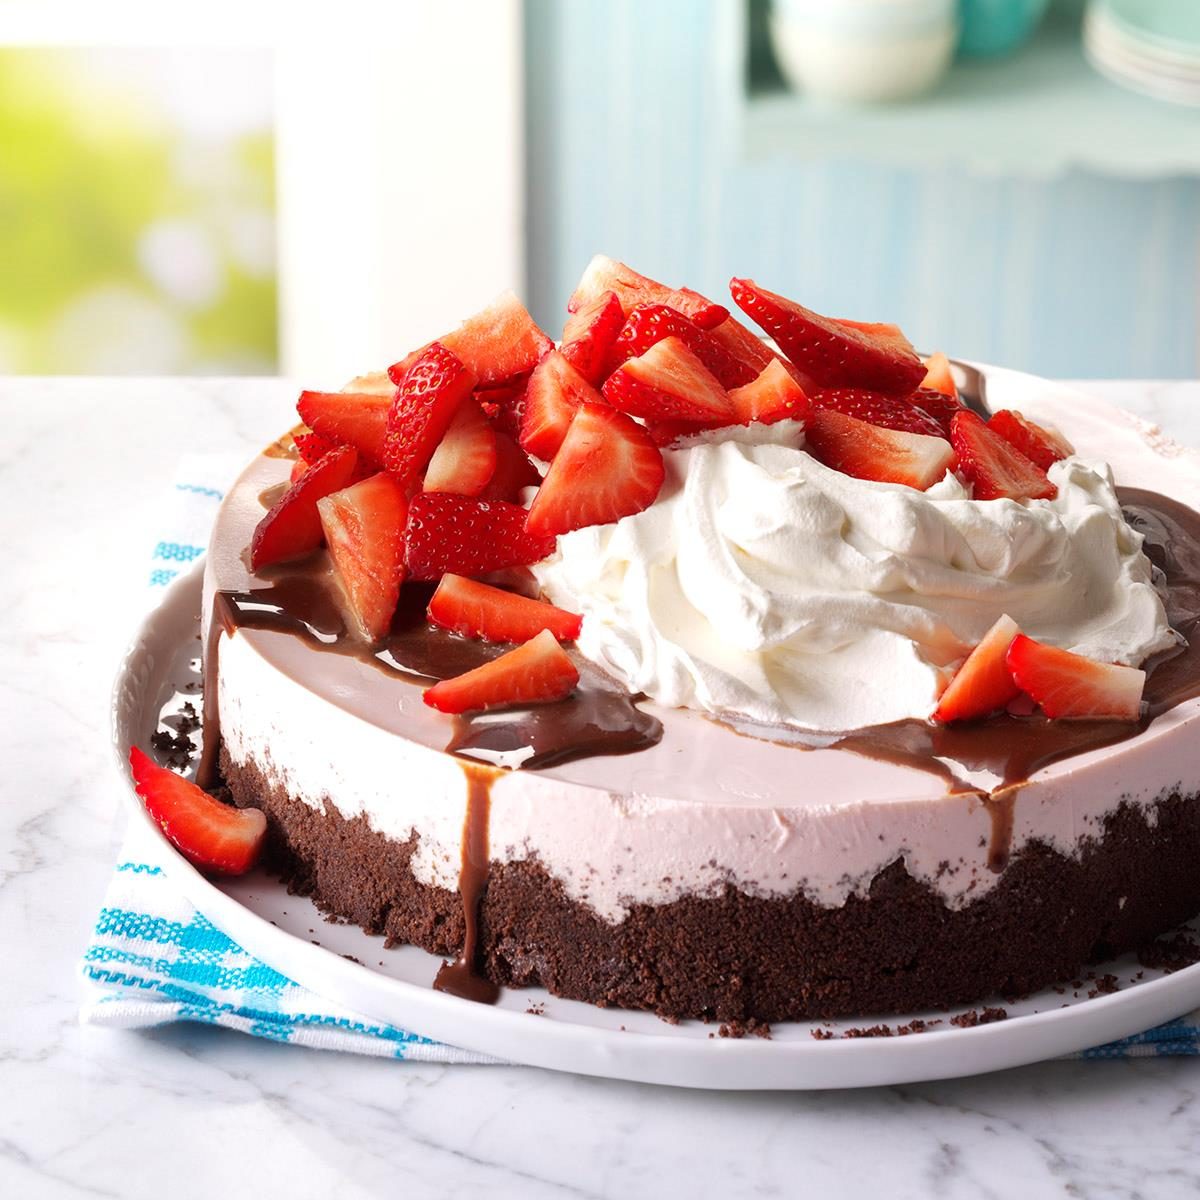 Chocolate-Topped草莓芝士蛋糕